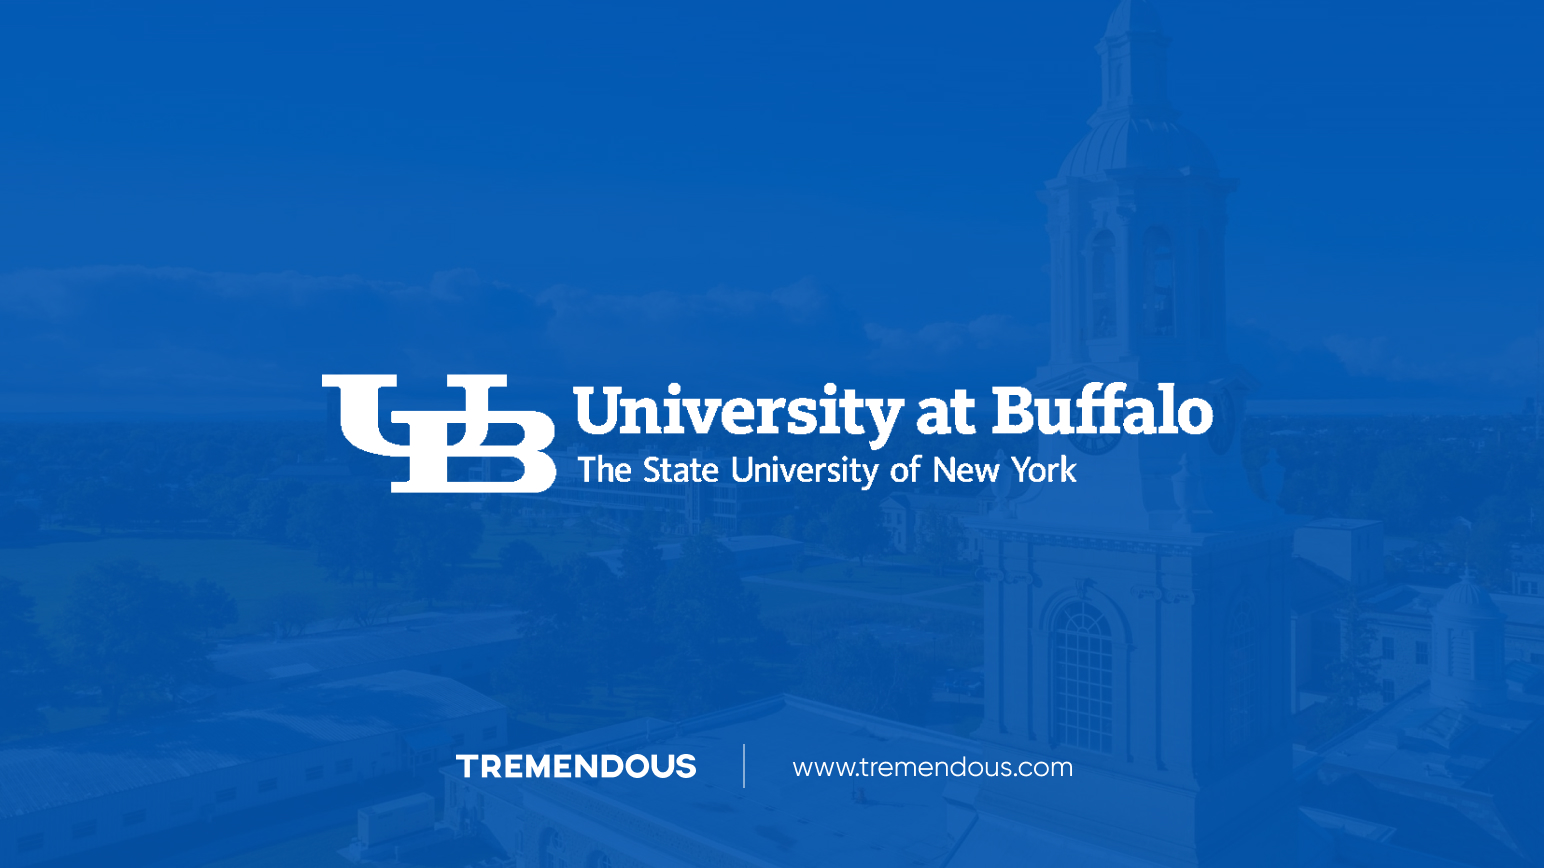 The University of Buffalo logo on a blue background.